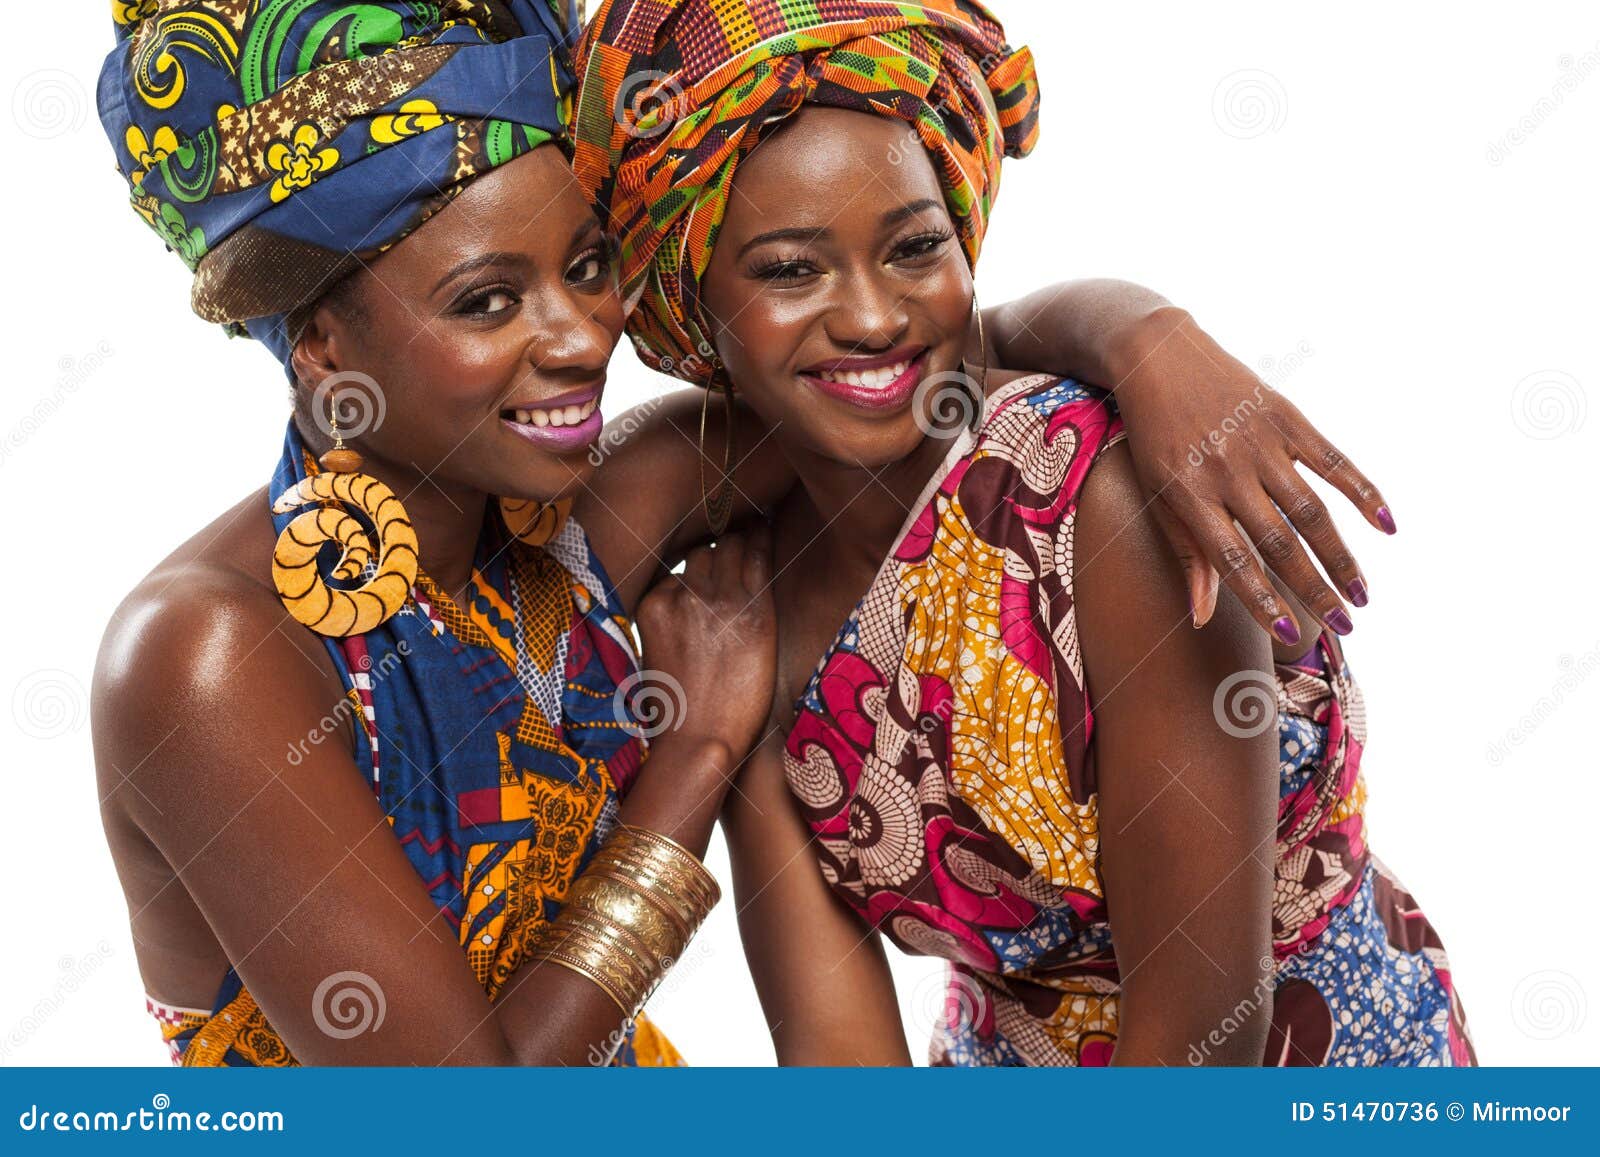 african female models posing in dresses.